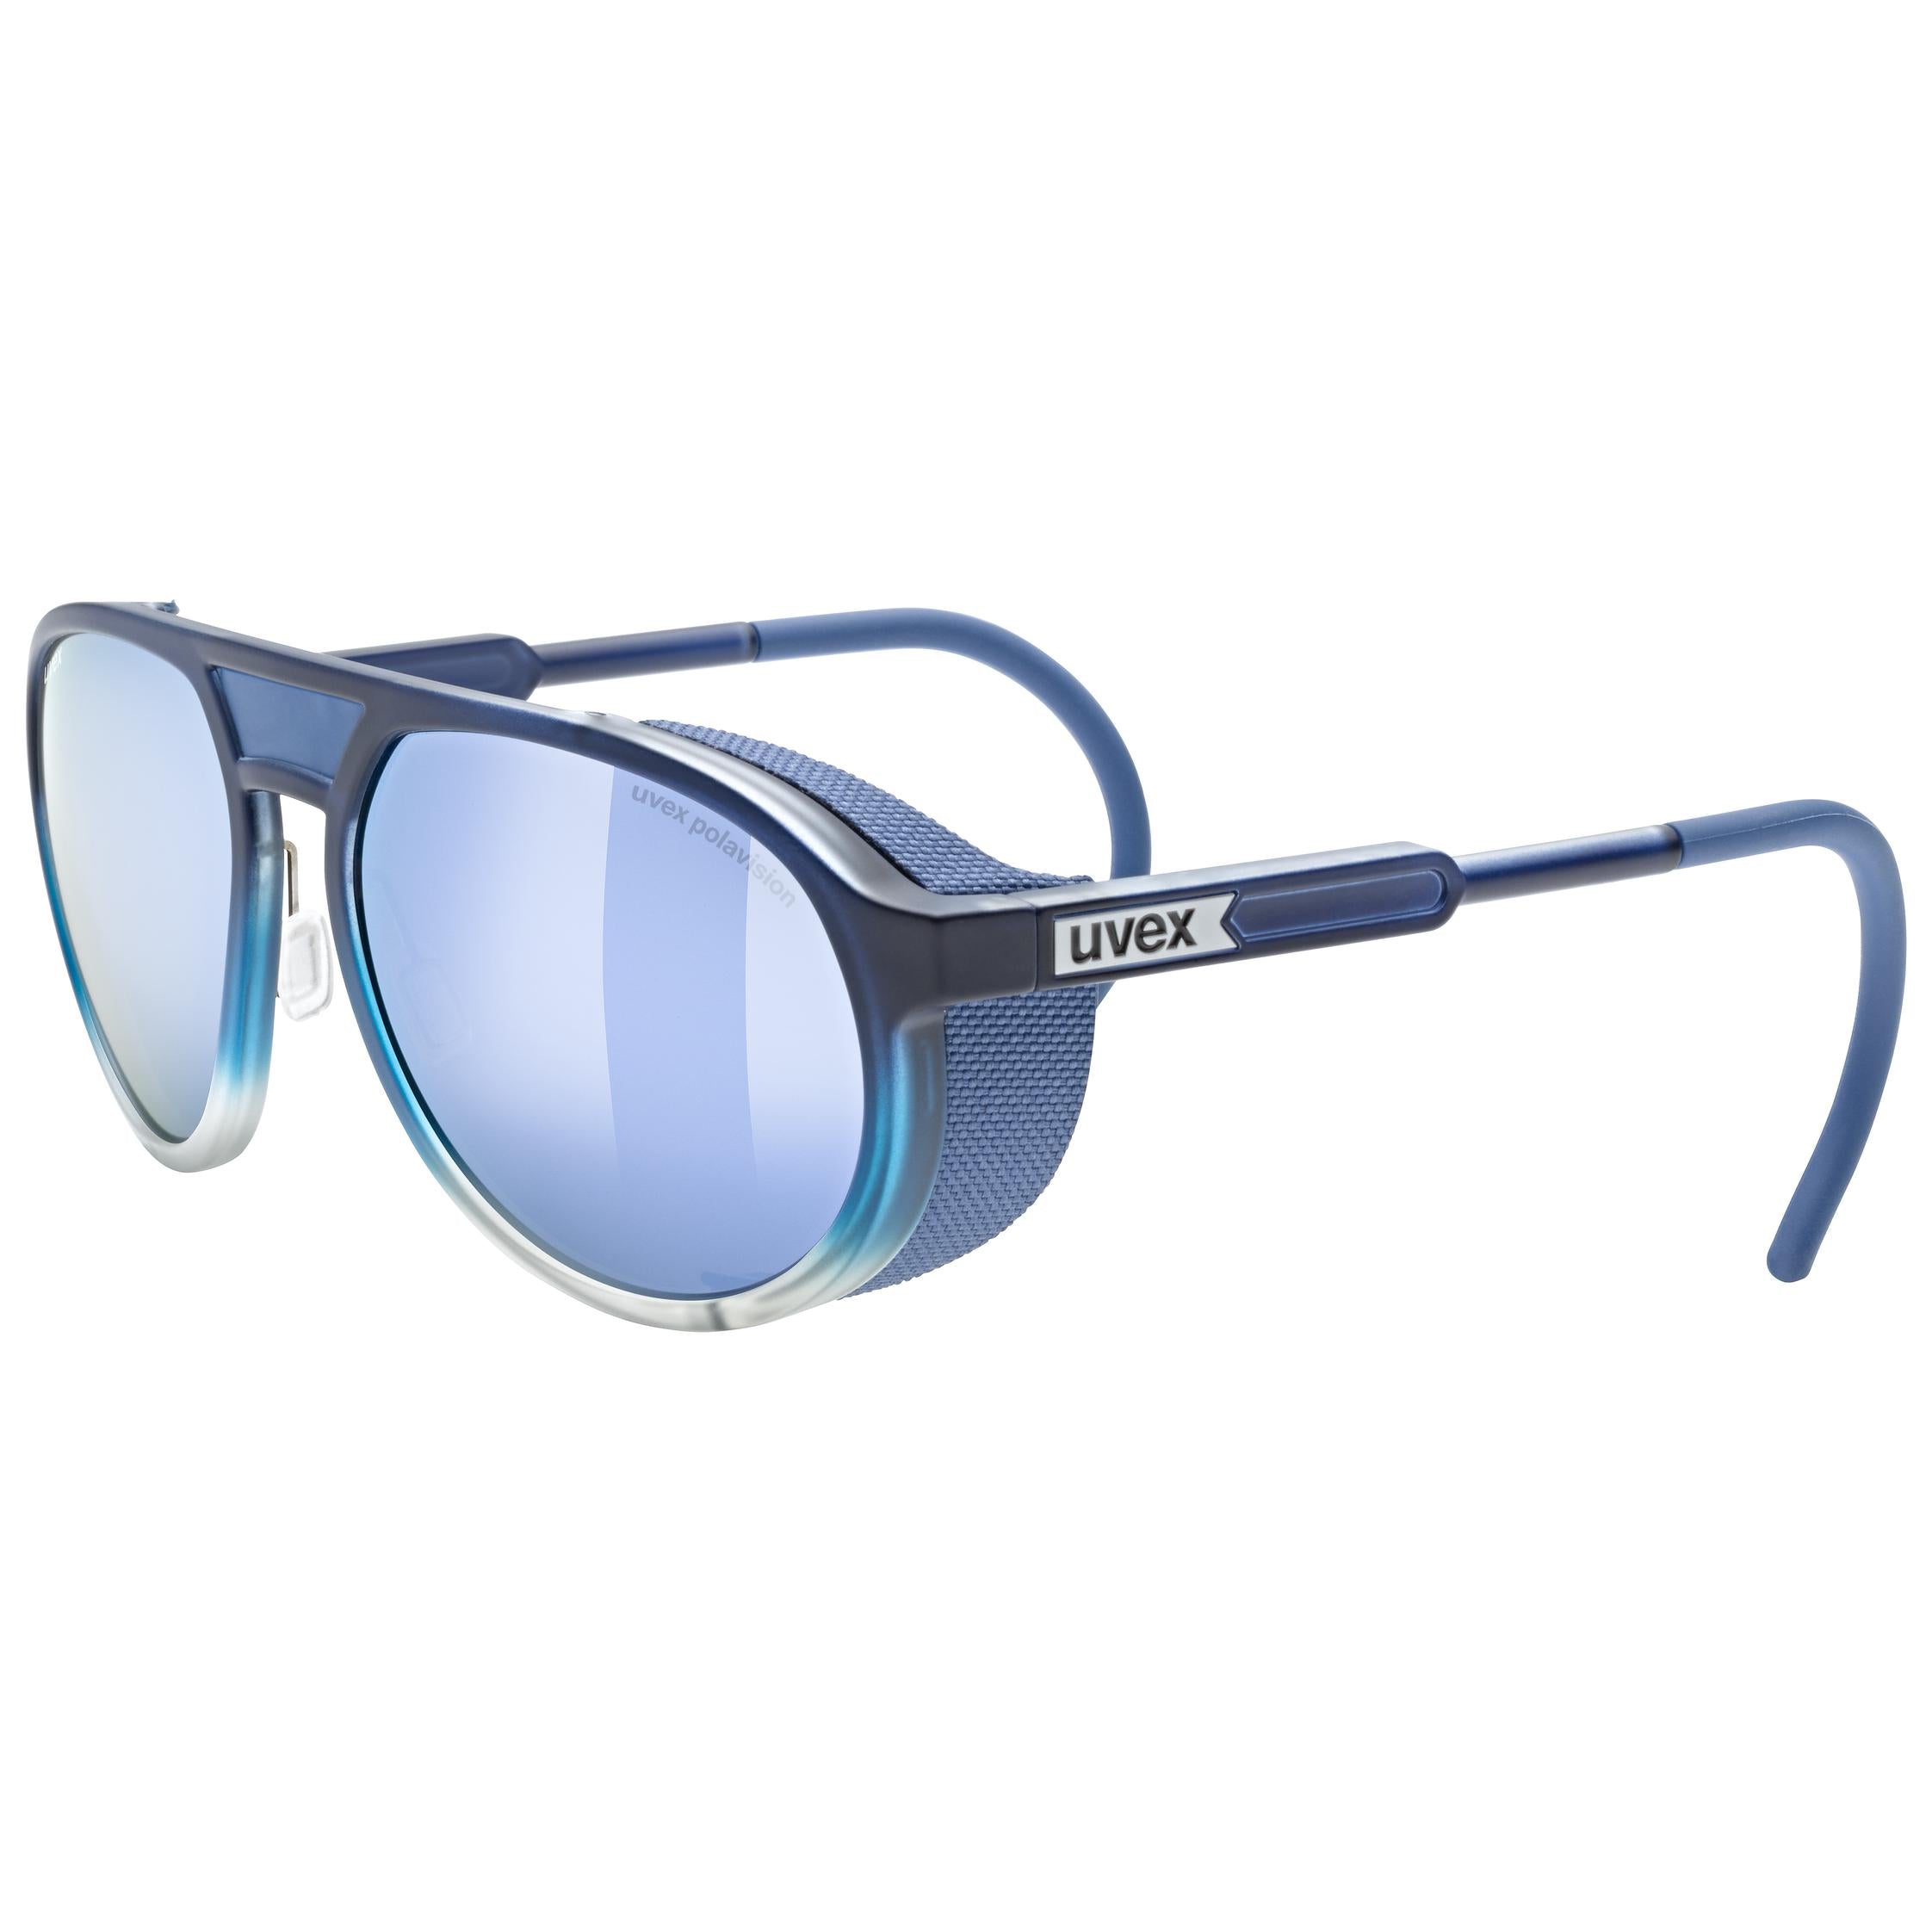 Top more than 158 uvex sunglasses review super hot